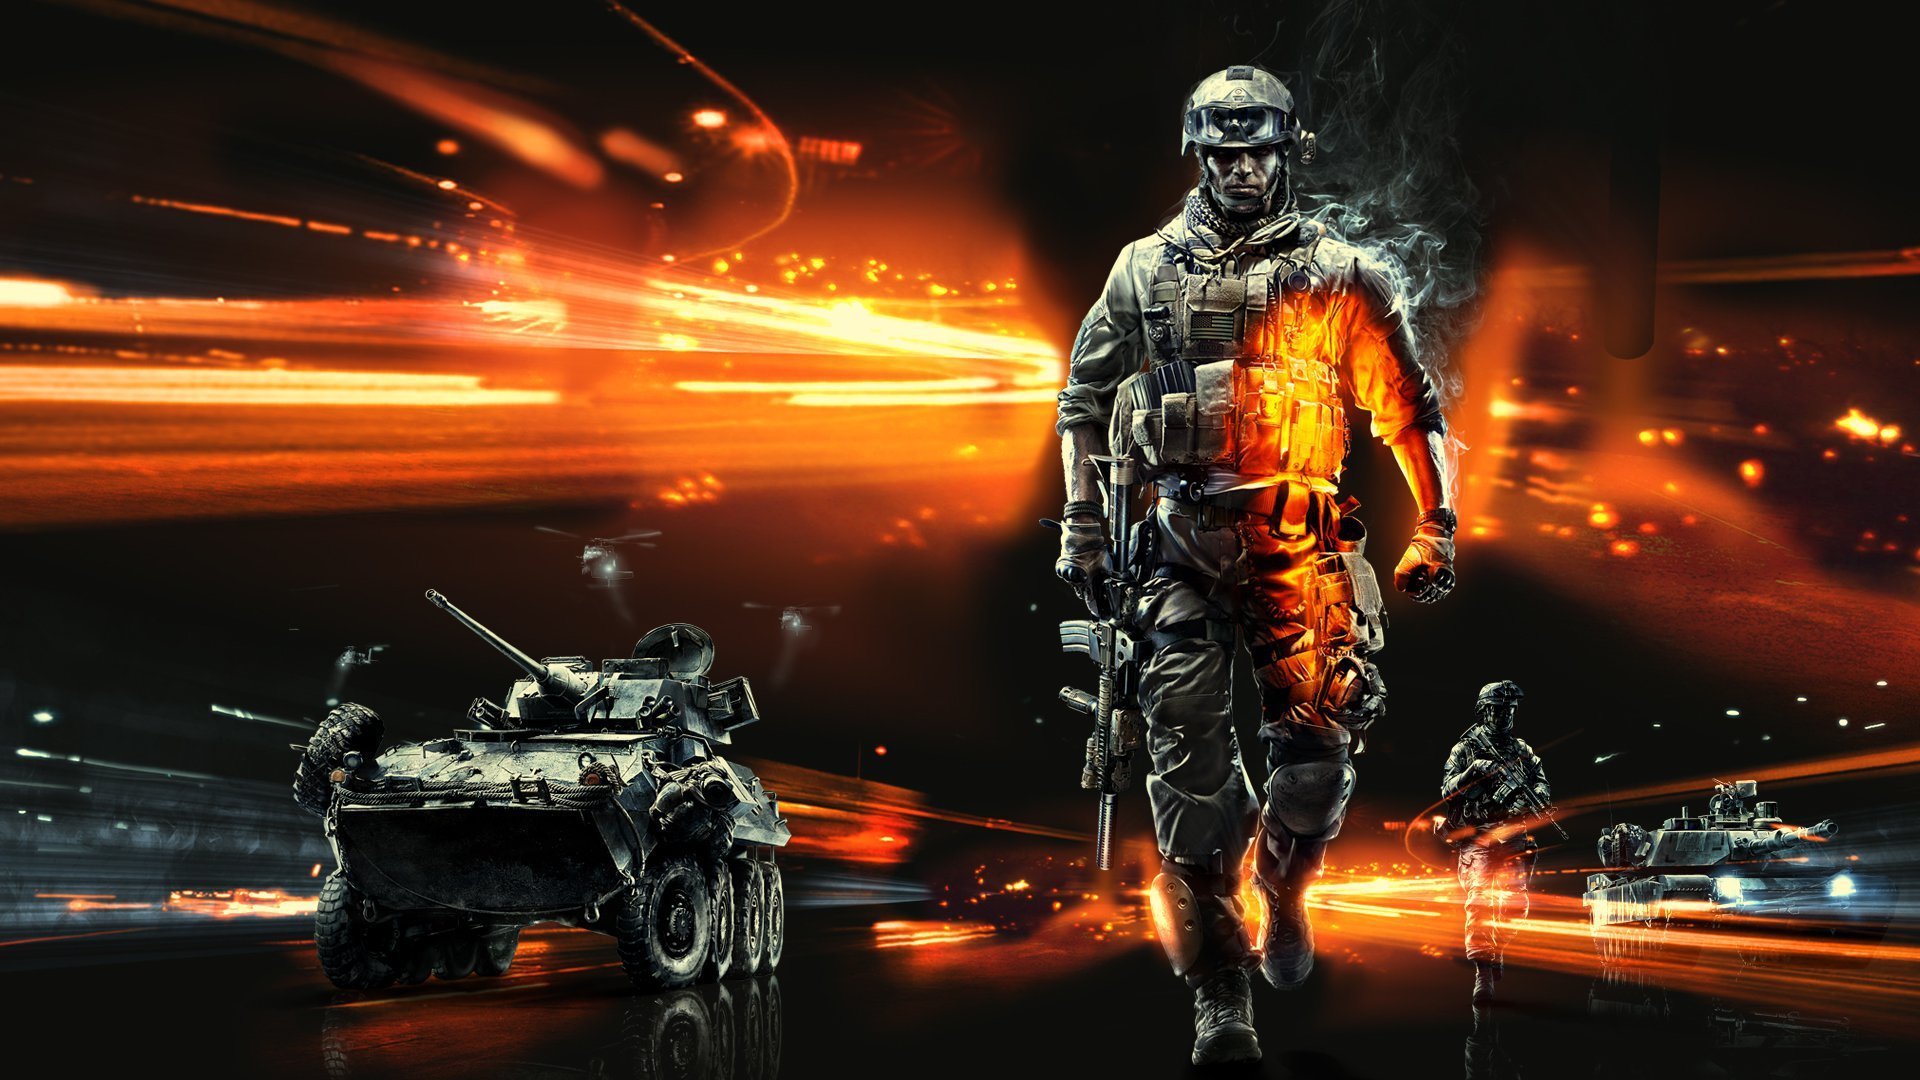 Battlefield HD download for free